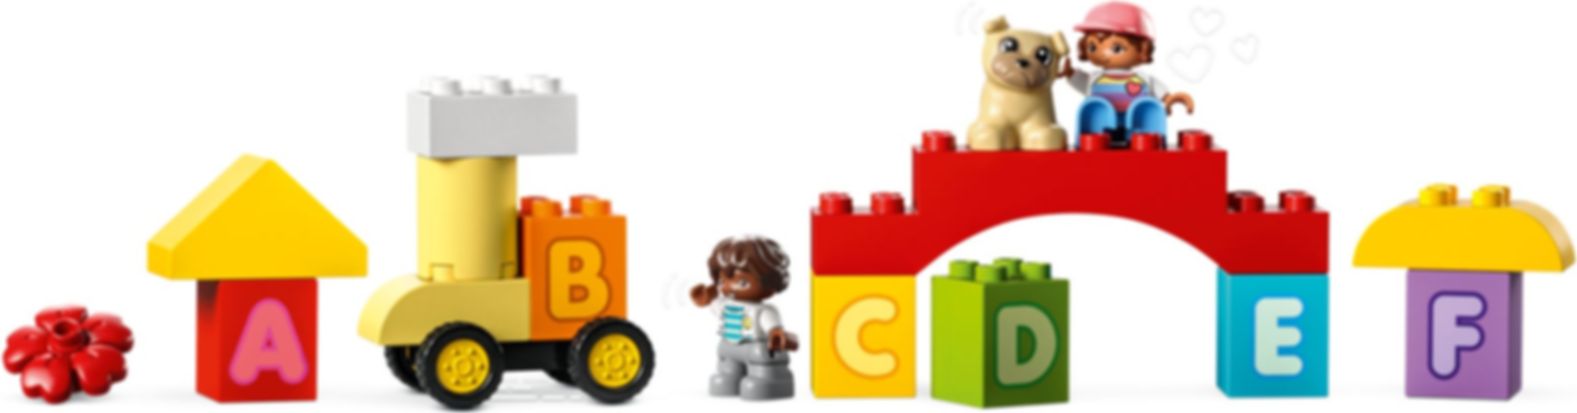 LEGO® DUPLO® Alphabet Town components